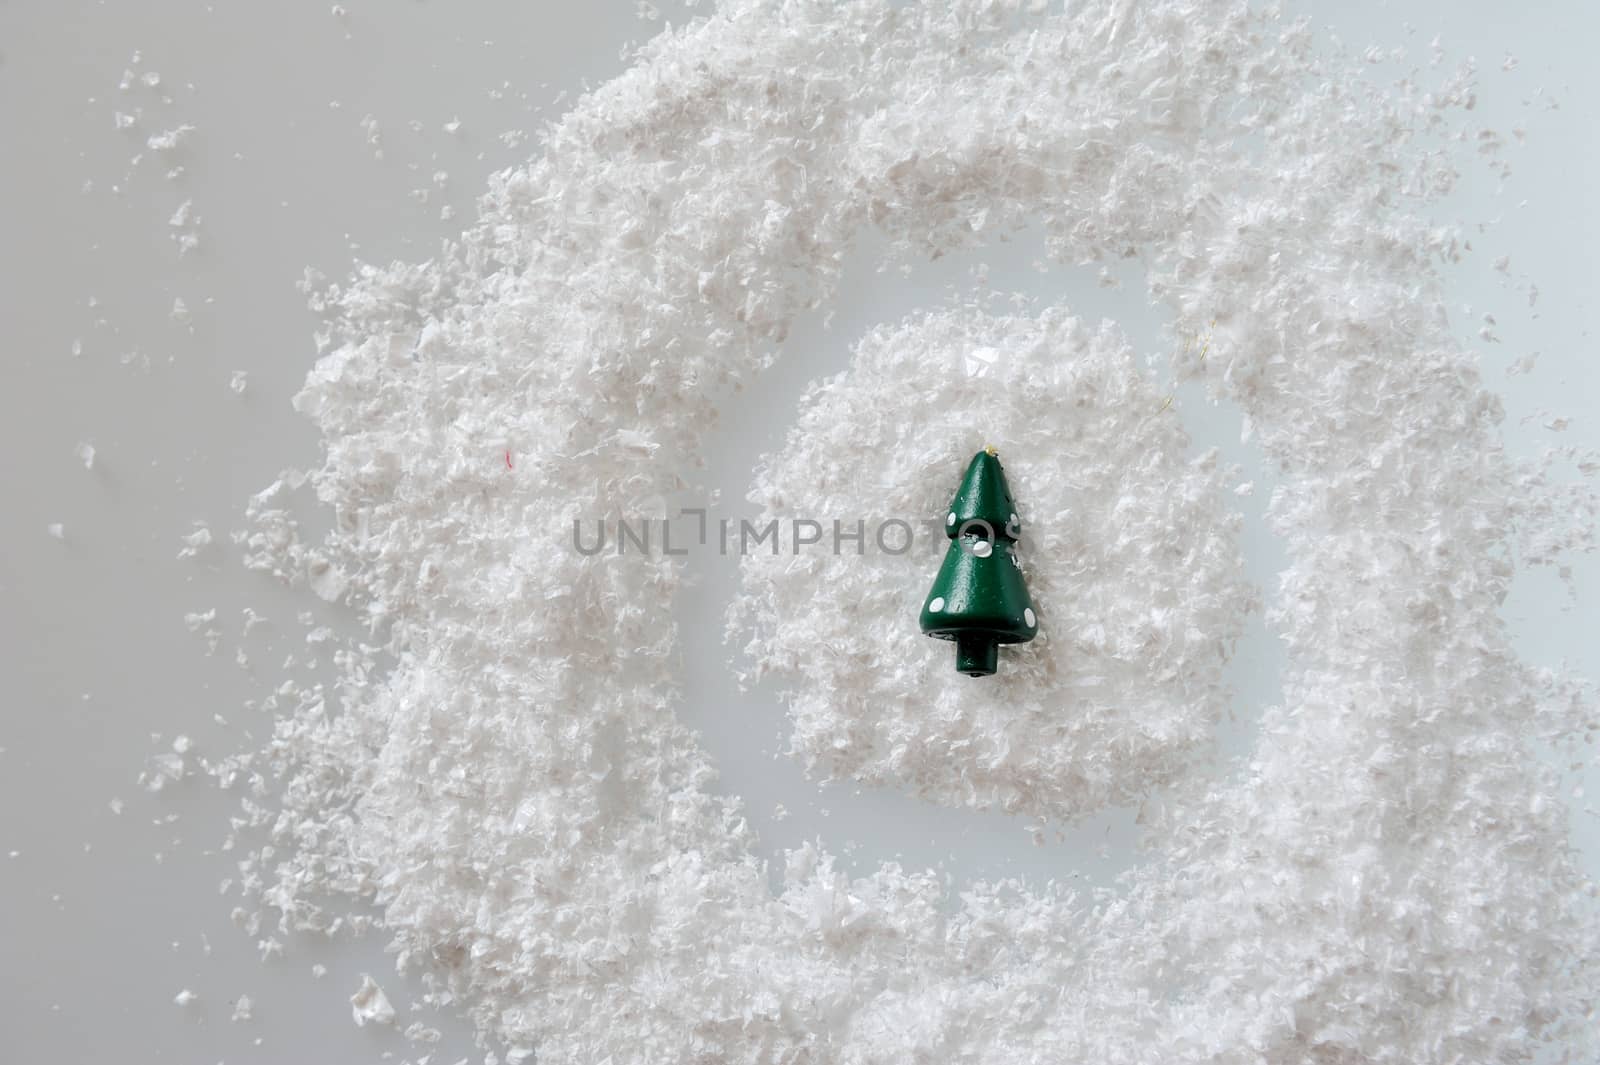 Miniature Christmas Tree on snow